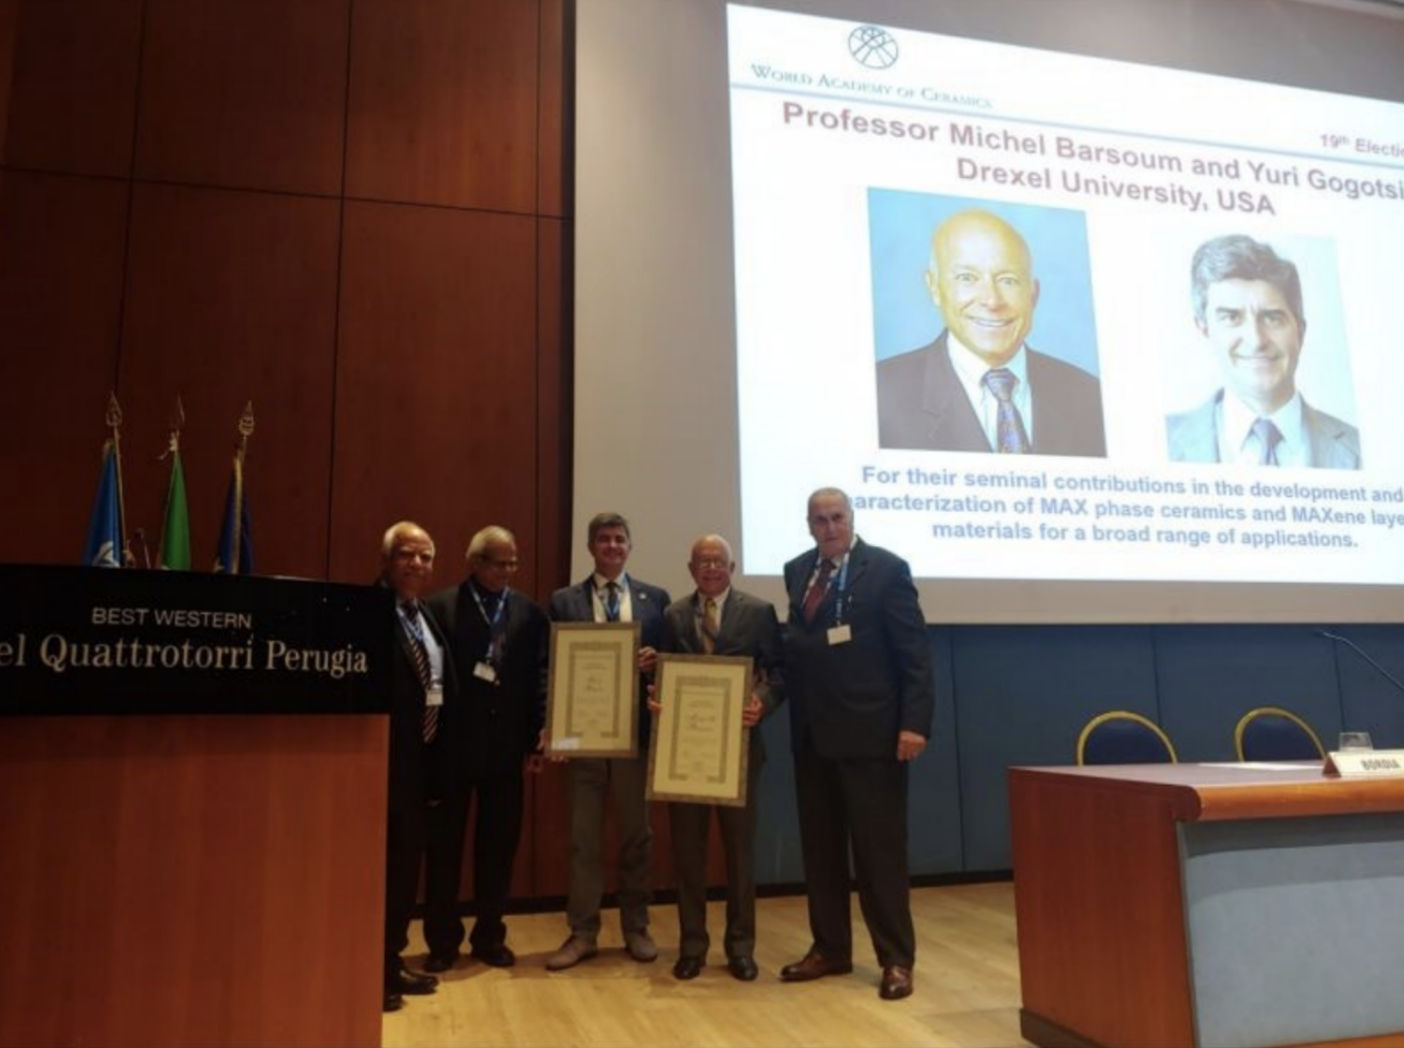 Professors Gogotsi and Barsoum Receive Award at CIMTEC